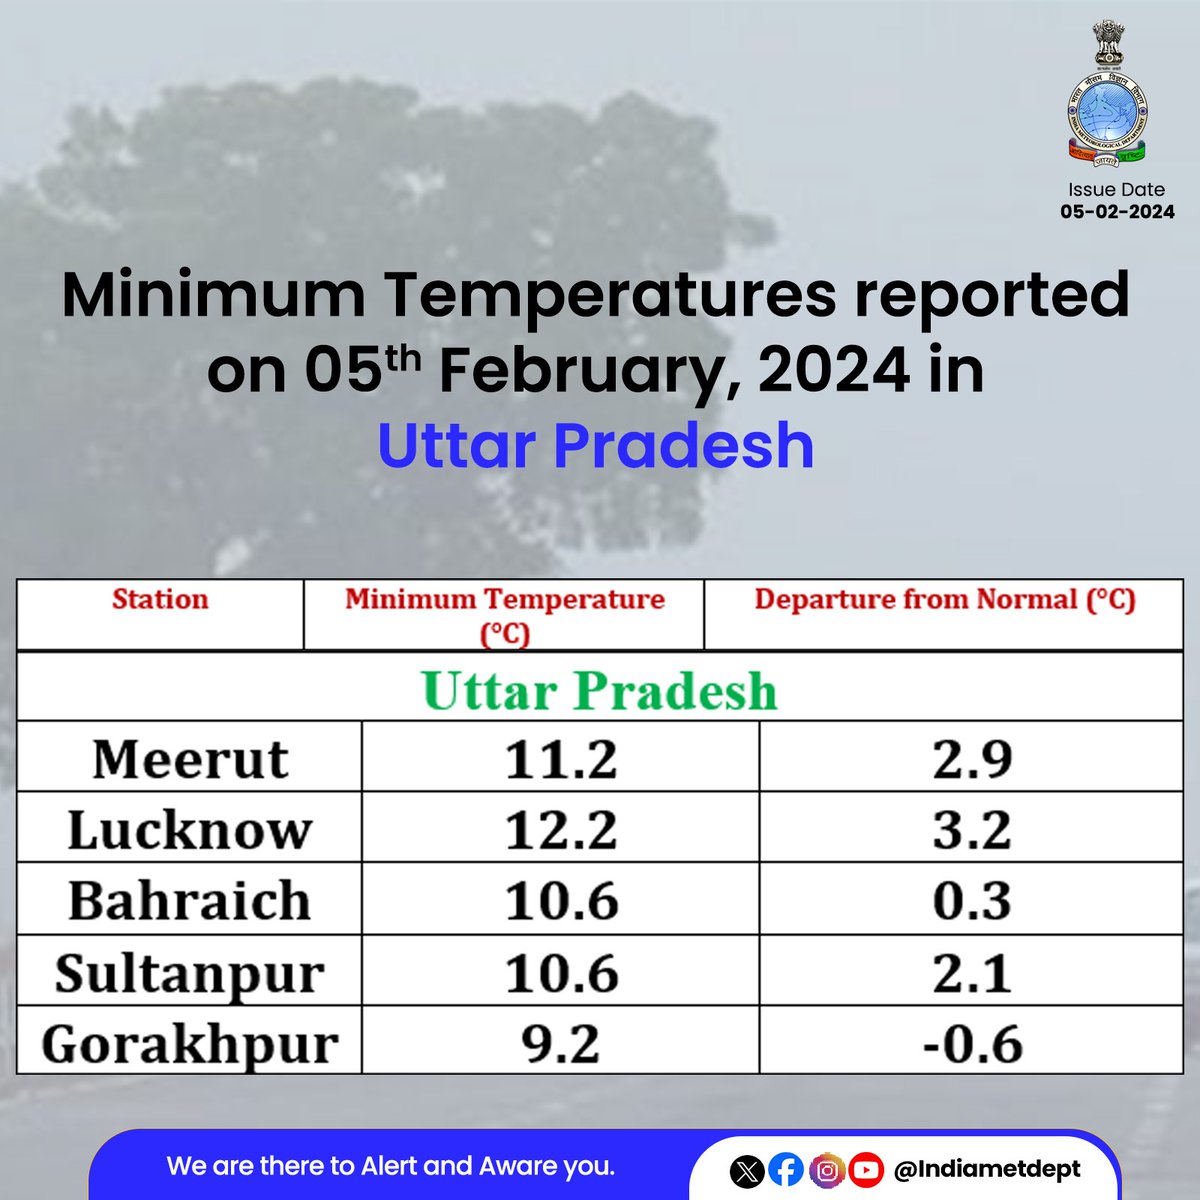 Minimum Temperatures reported on 5th February, 2024 in Uttar Pradesh 

#upweather #mintemperature

@AAI_Official @dgcaindia @railminindia
@nhai_official @moesgoi @DDNewslive
@ndmaindia @airnewsalerts @CentreLucknow
@CMOfficeUP @myogiadityanath